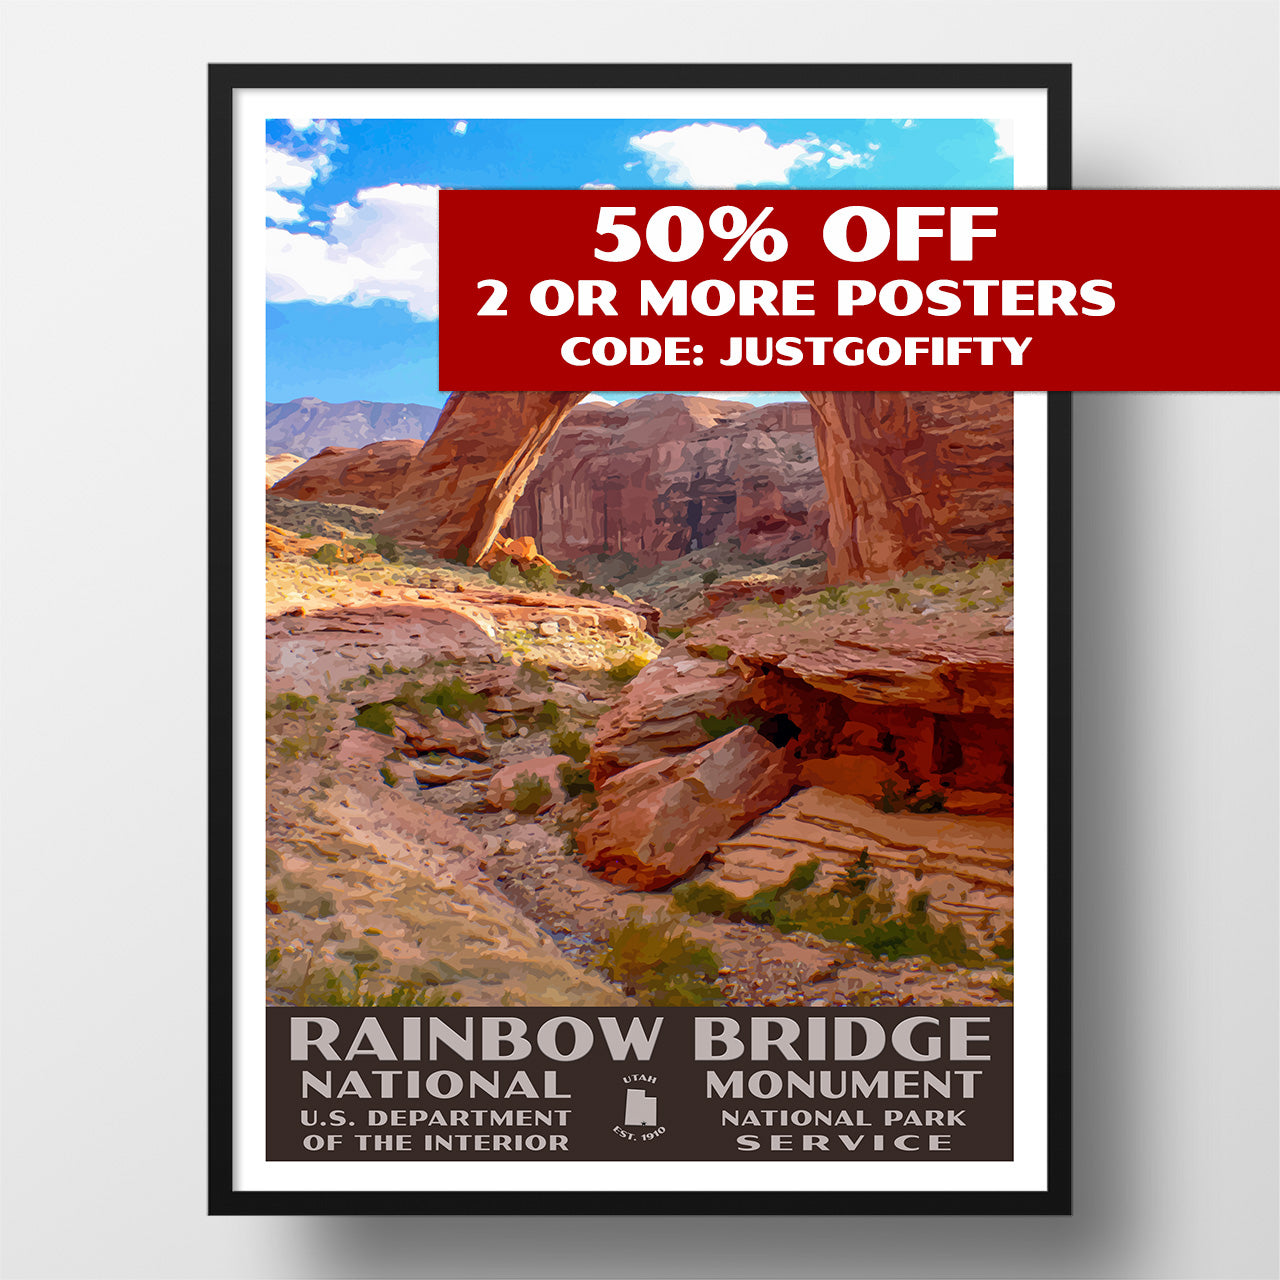 Rainbow Bridge National Monument poster